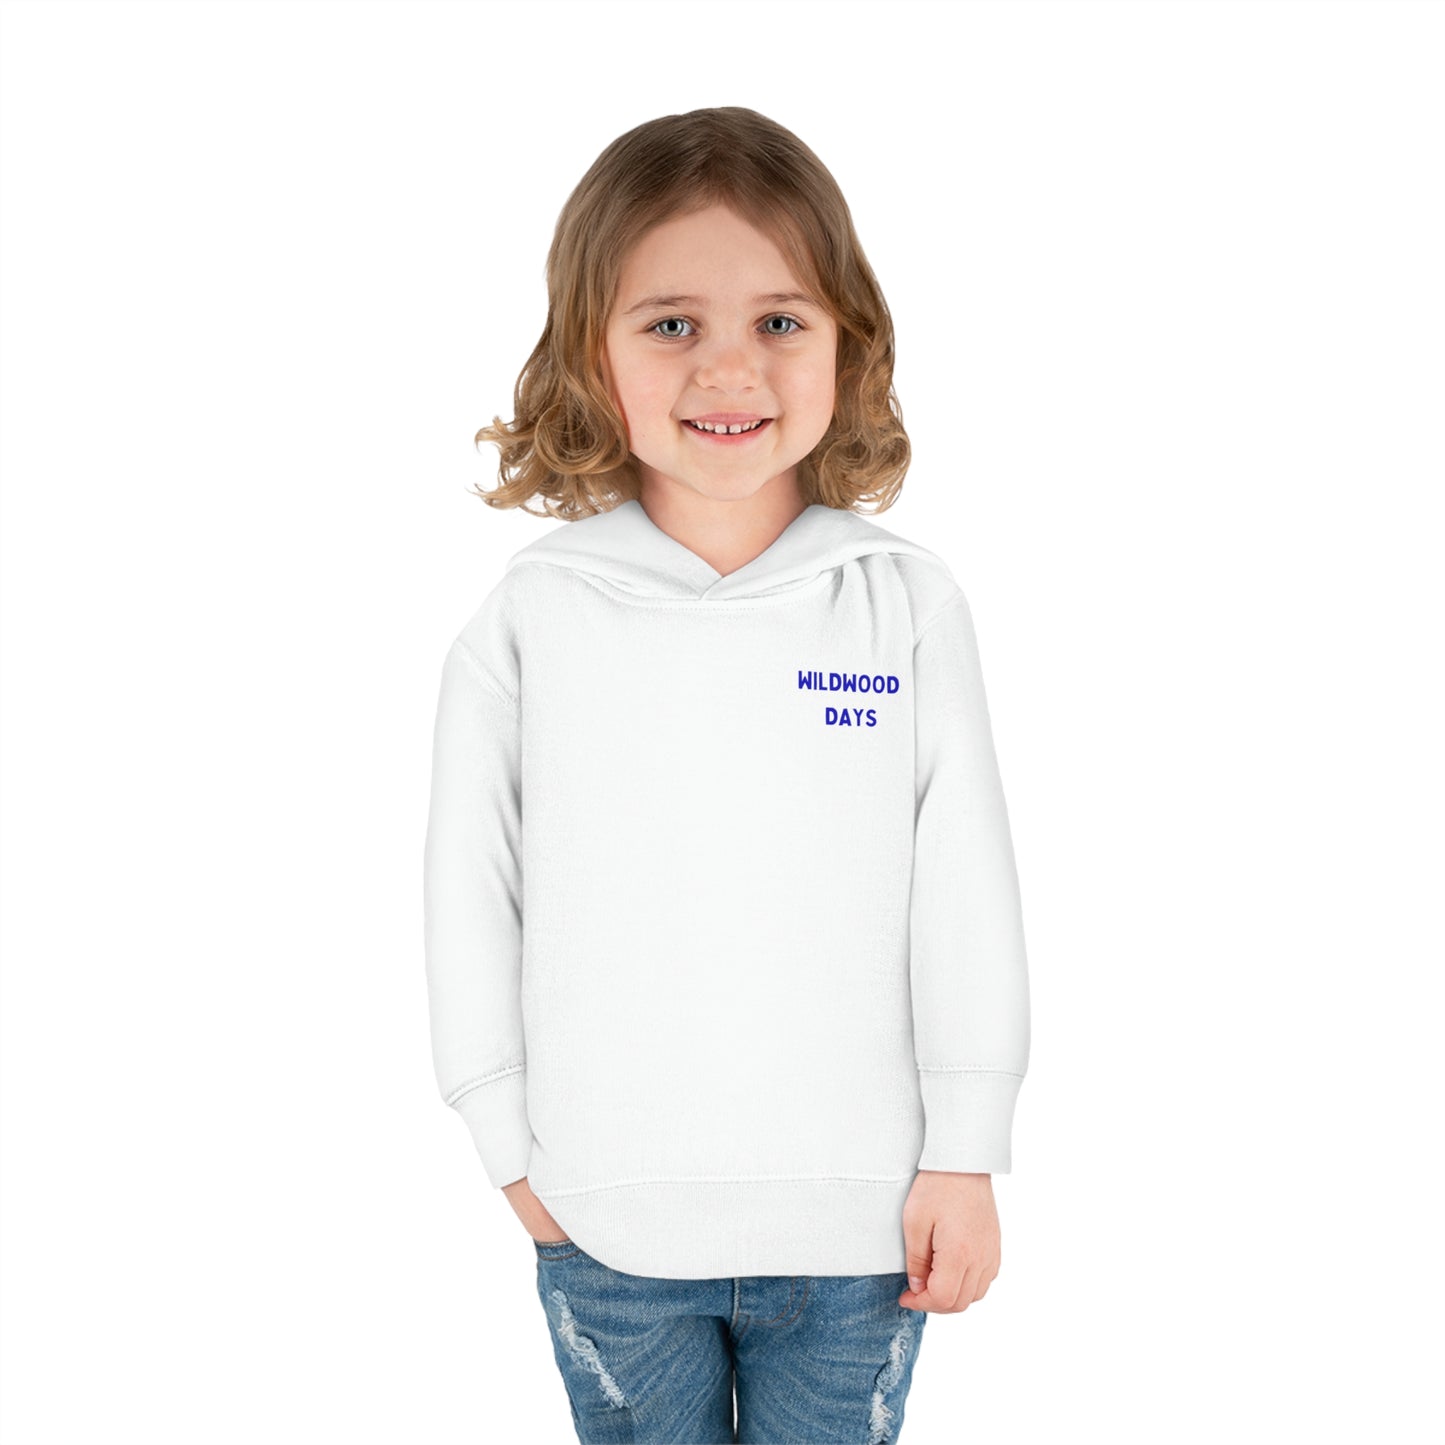 Wildwood, Toddler Wildwood Days, Wildwood Graphic Sweatshirt, Toddler Pullover Fleece Hoodie, Free Shipping